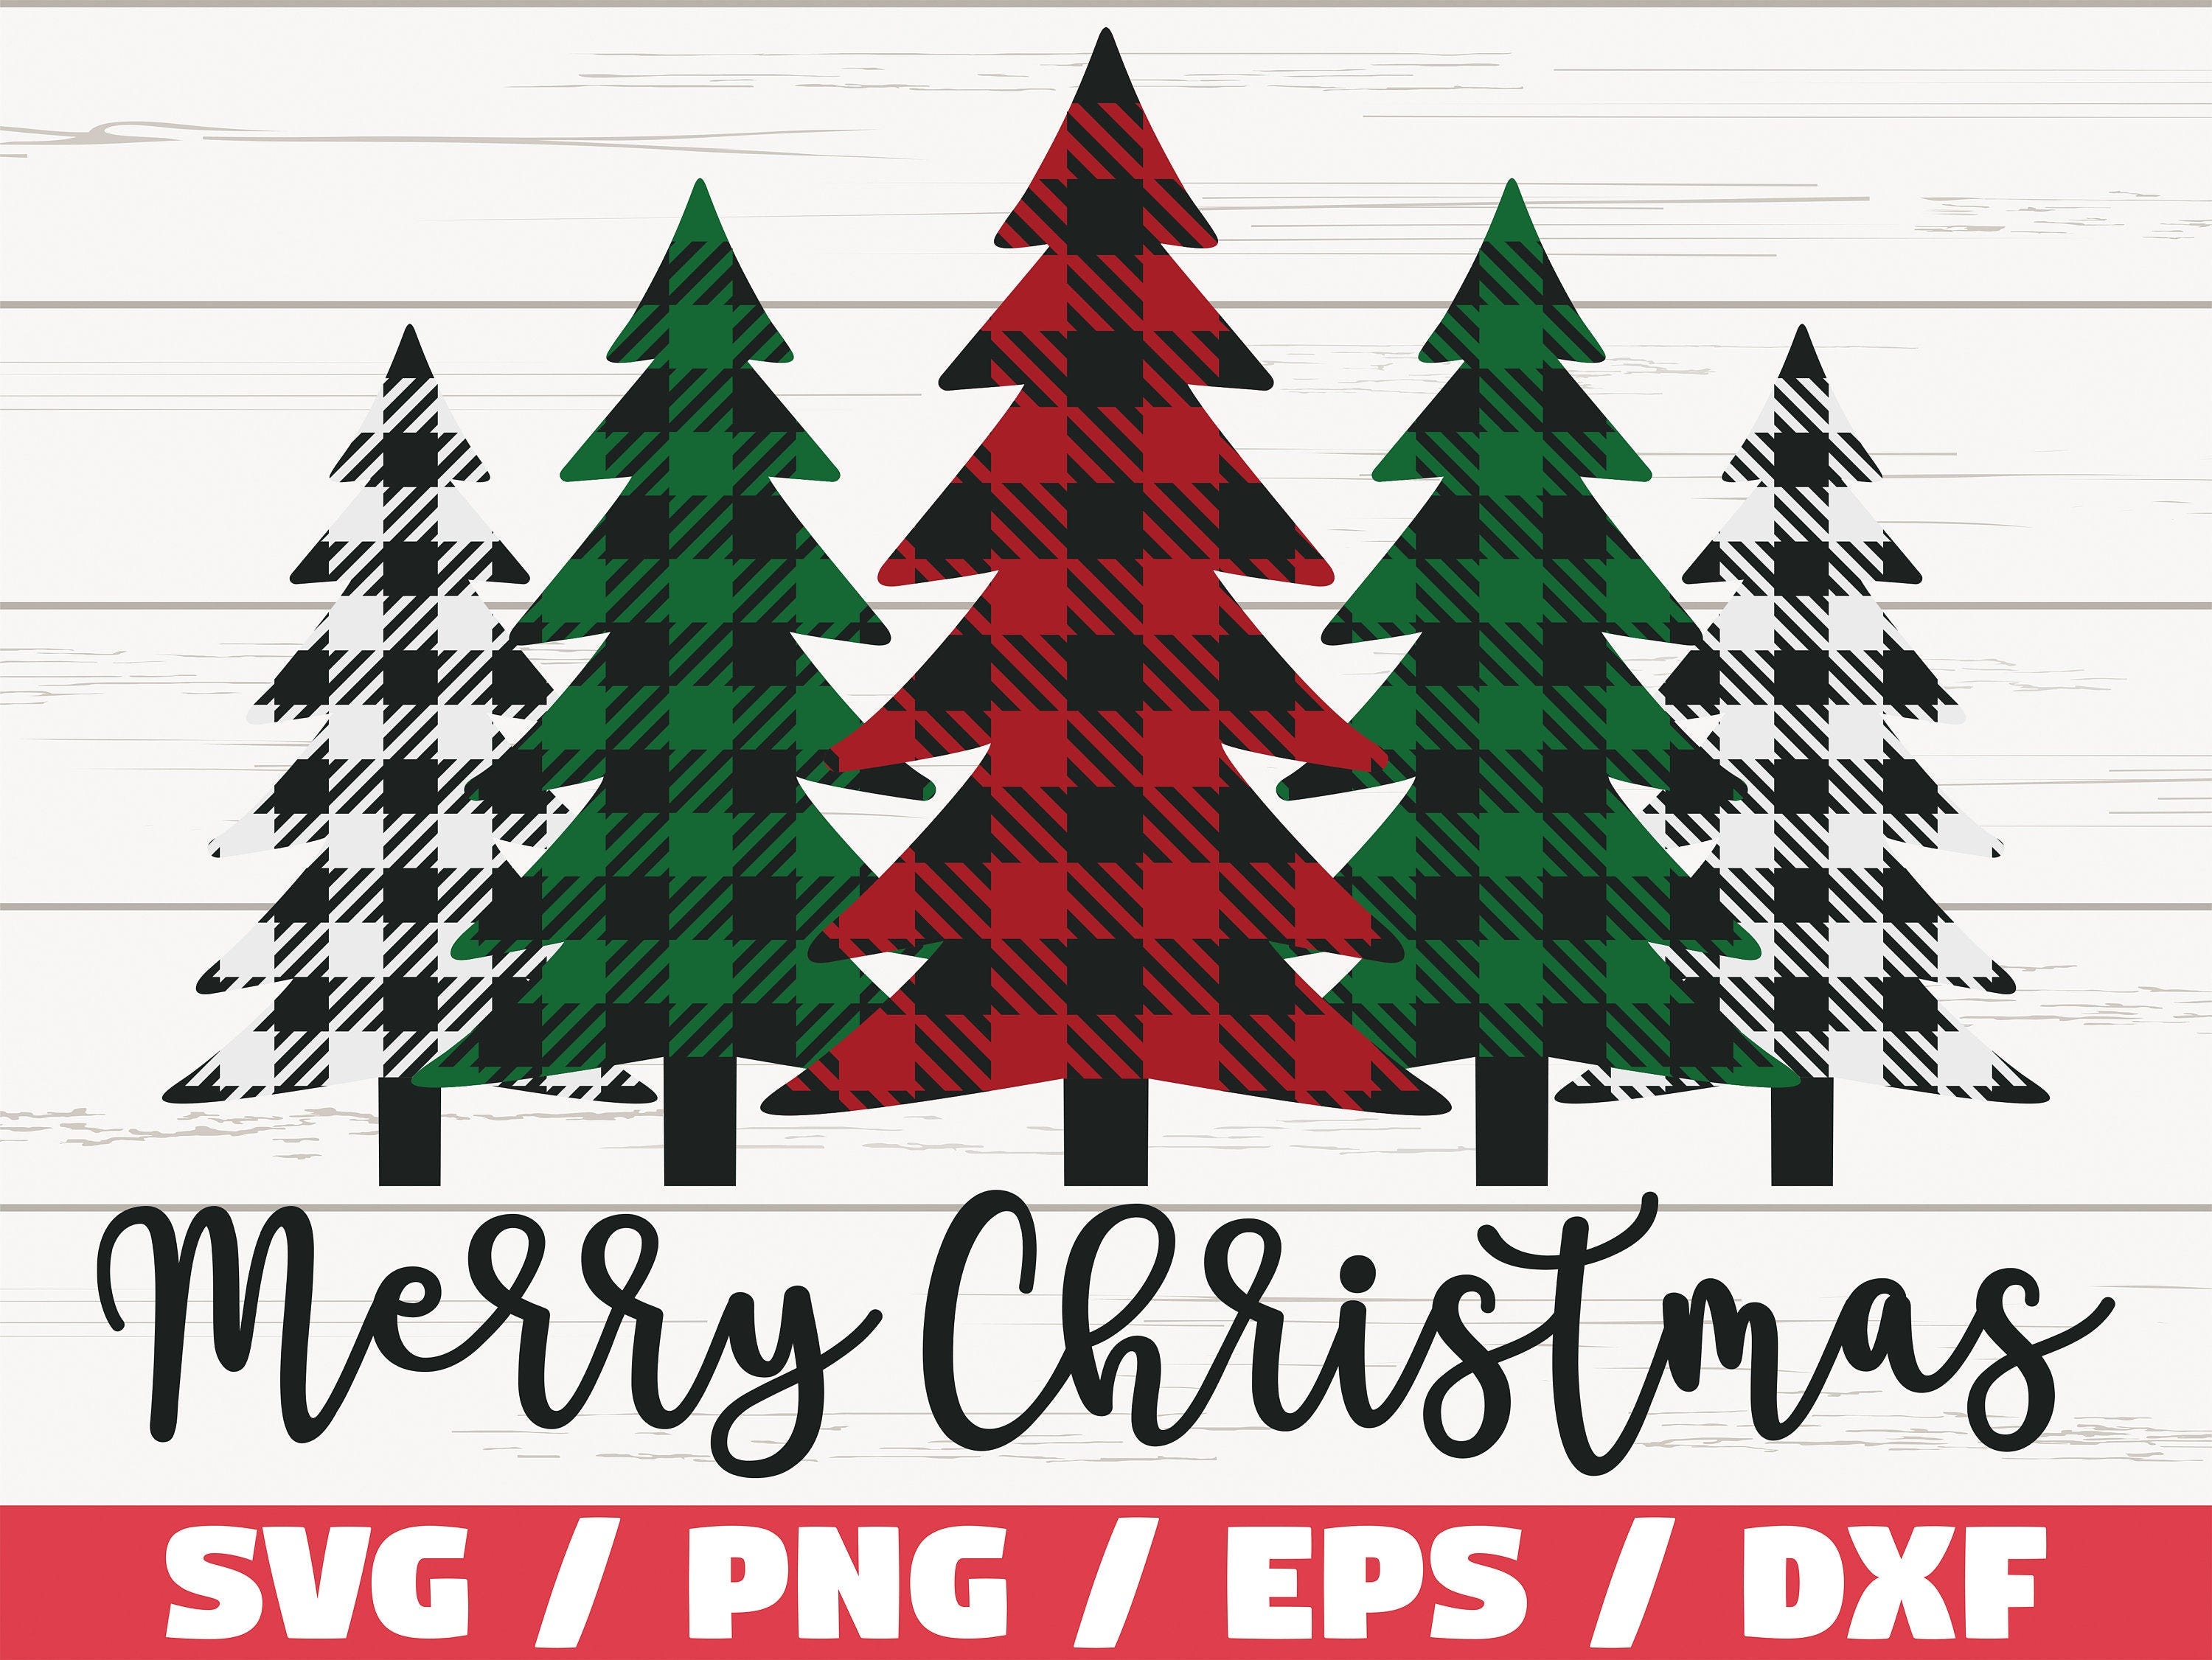 Merry Christmas SVG / Christmas Tree SVG /  Christmas Svg / Christmas Shirt Svg / Cut File / Cricut / Commercial use / Silhouette / DXF File